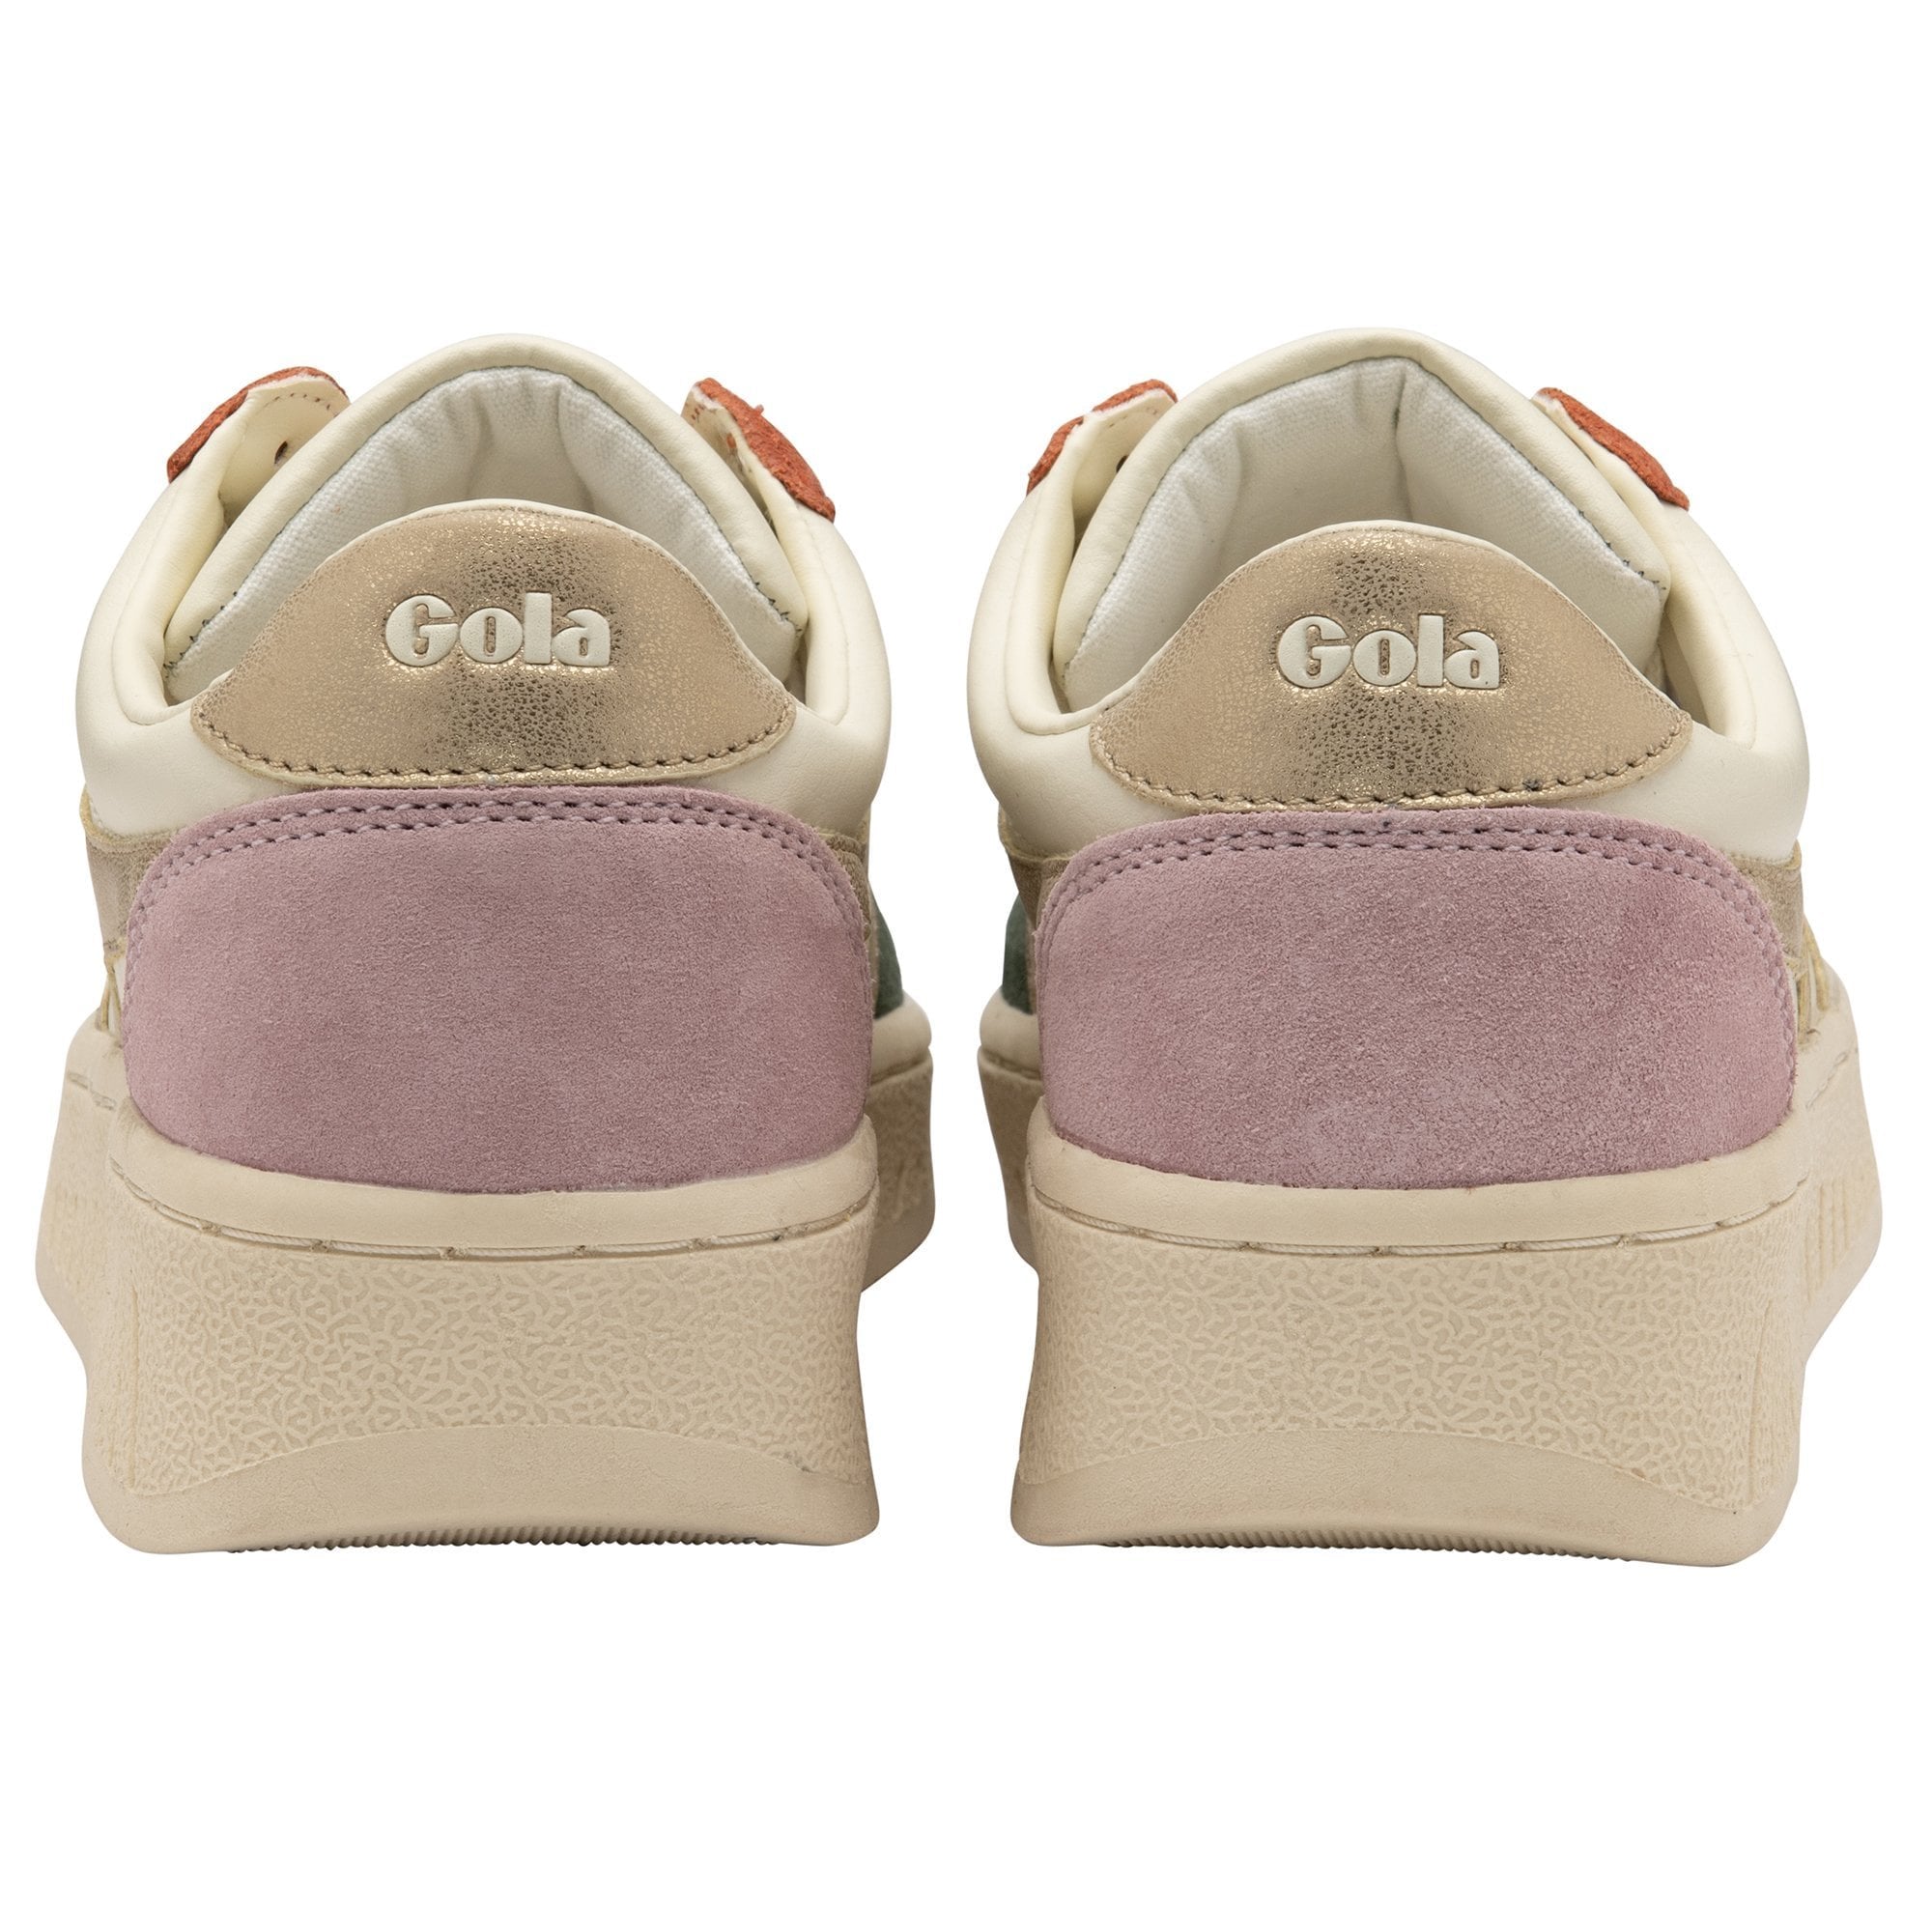 Gola Classics Women's Grandslam Quadrant Sneakers